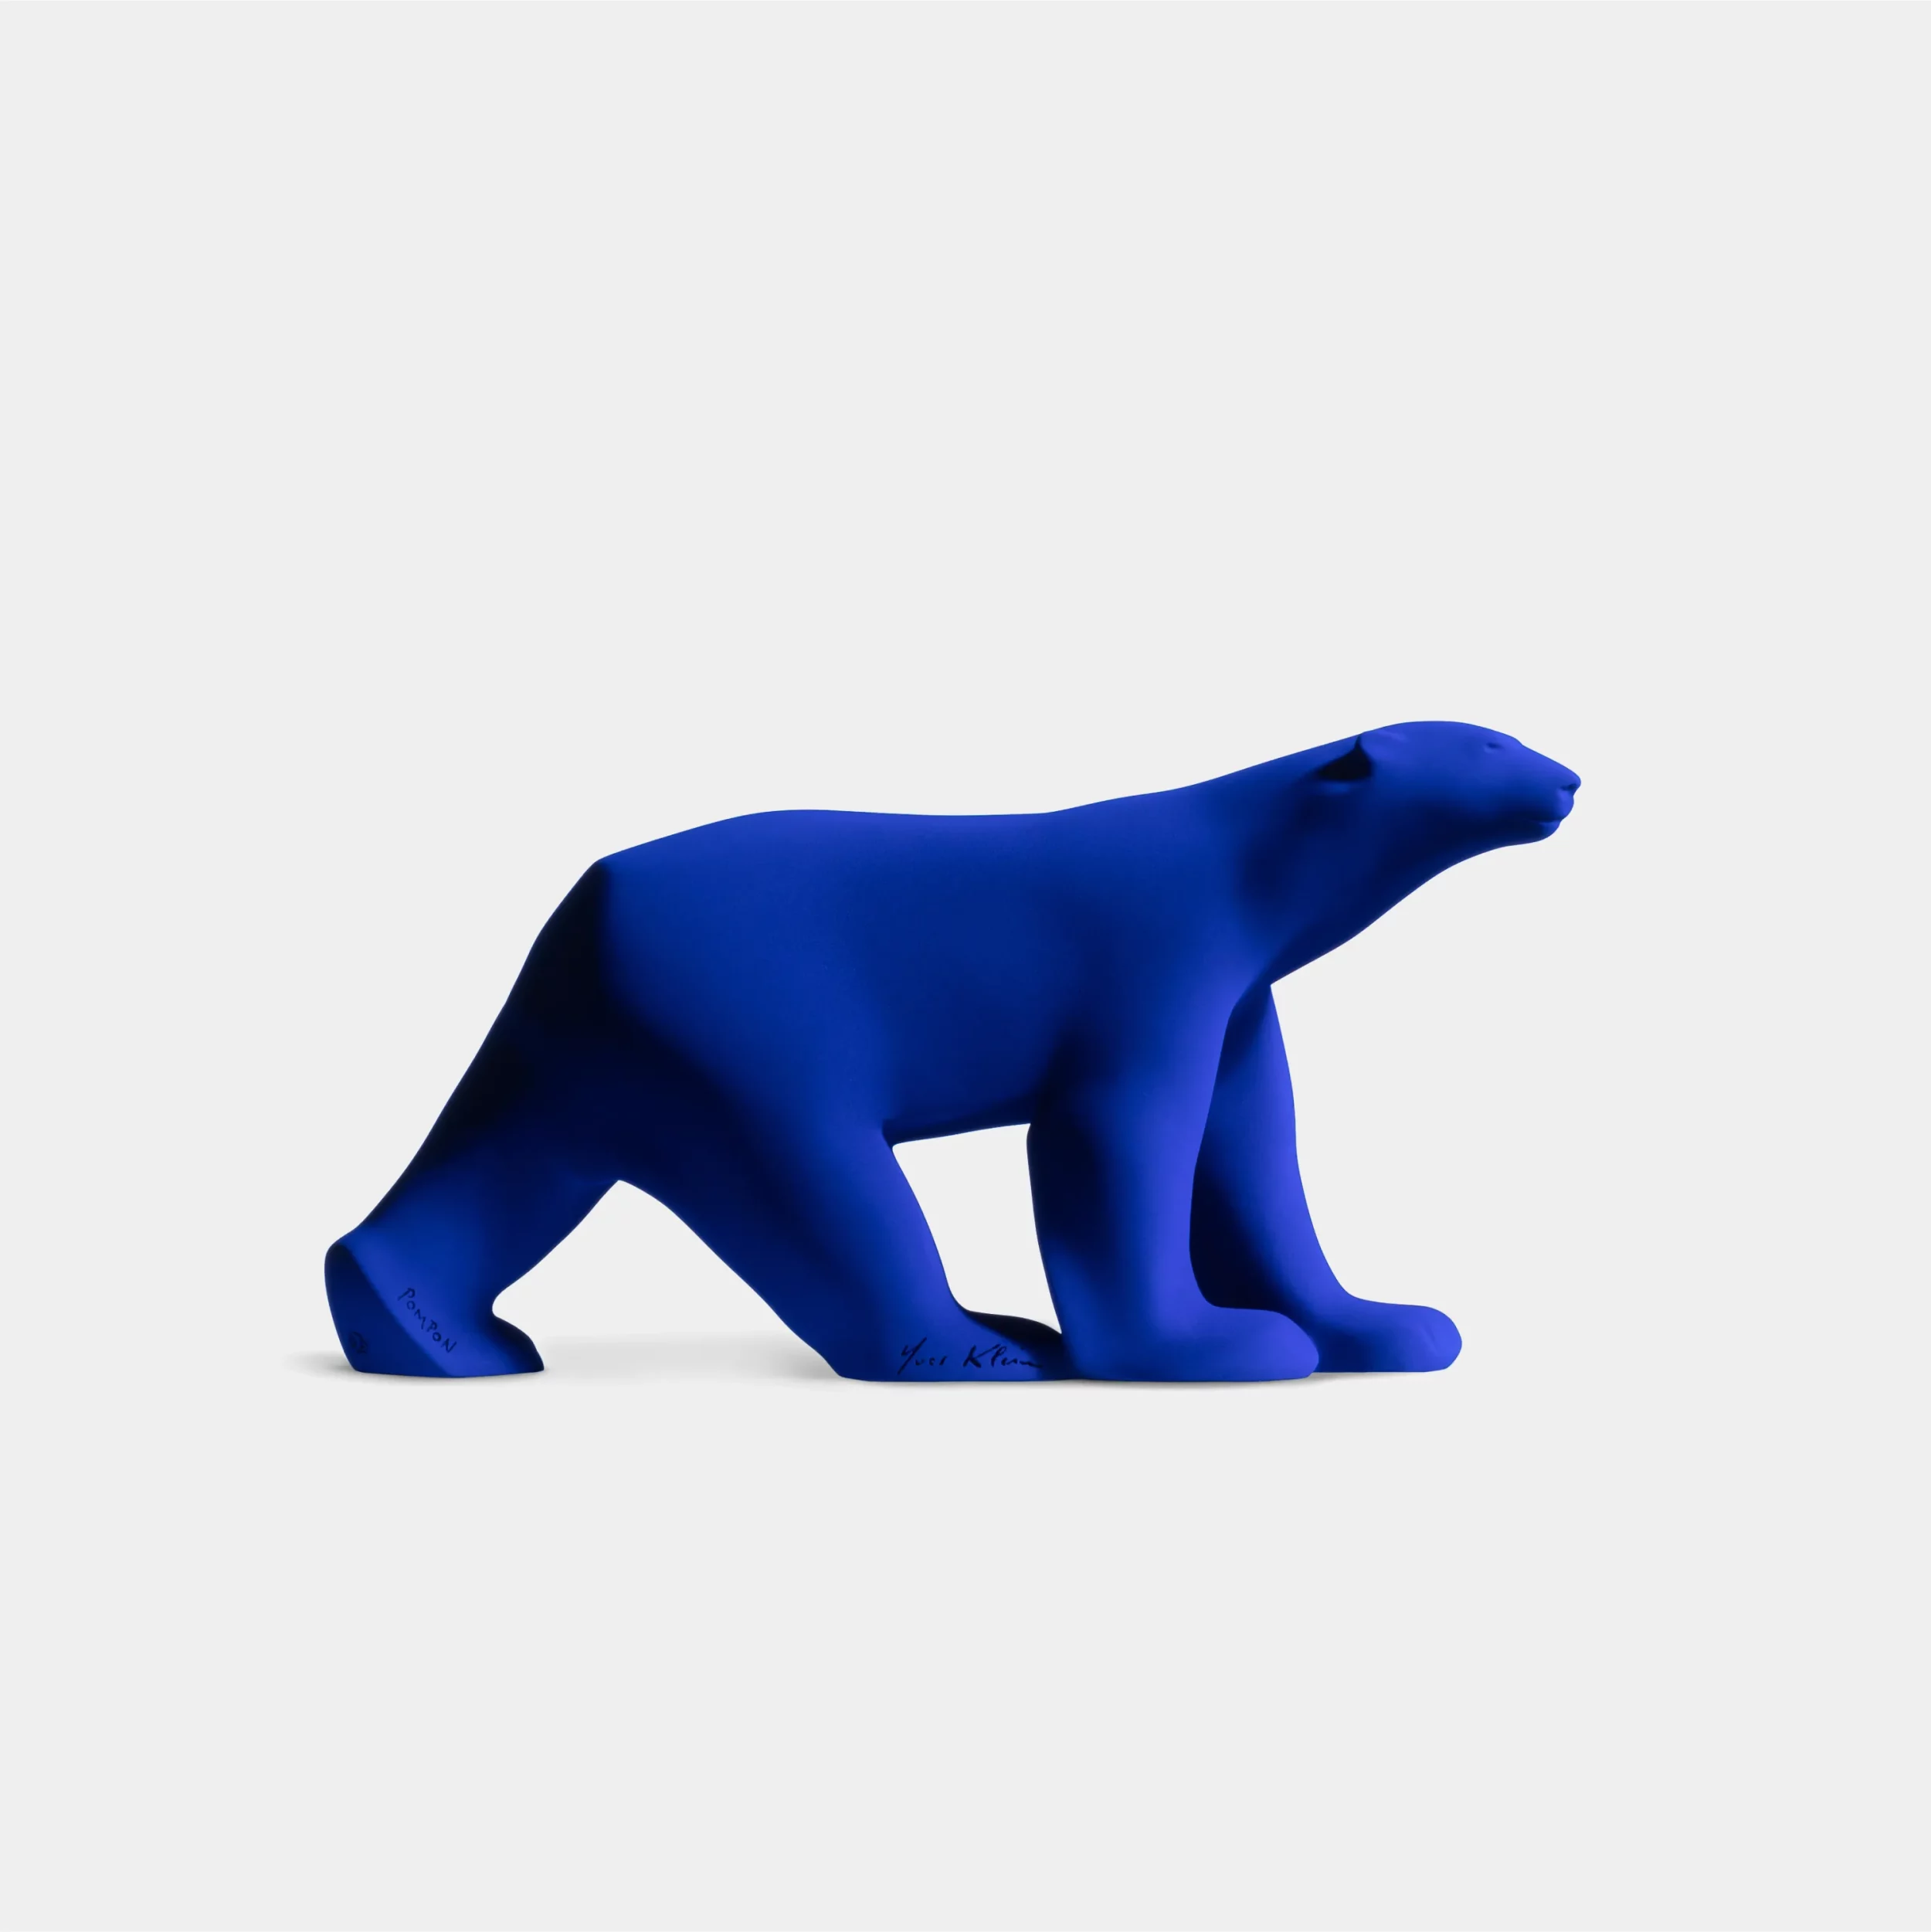 The François Pompon's Bear, Yves Klein limited edition